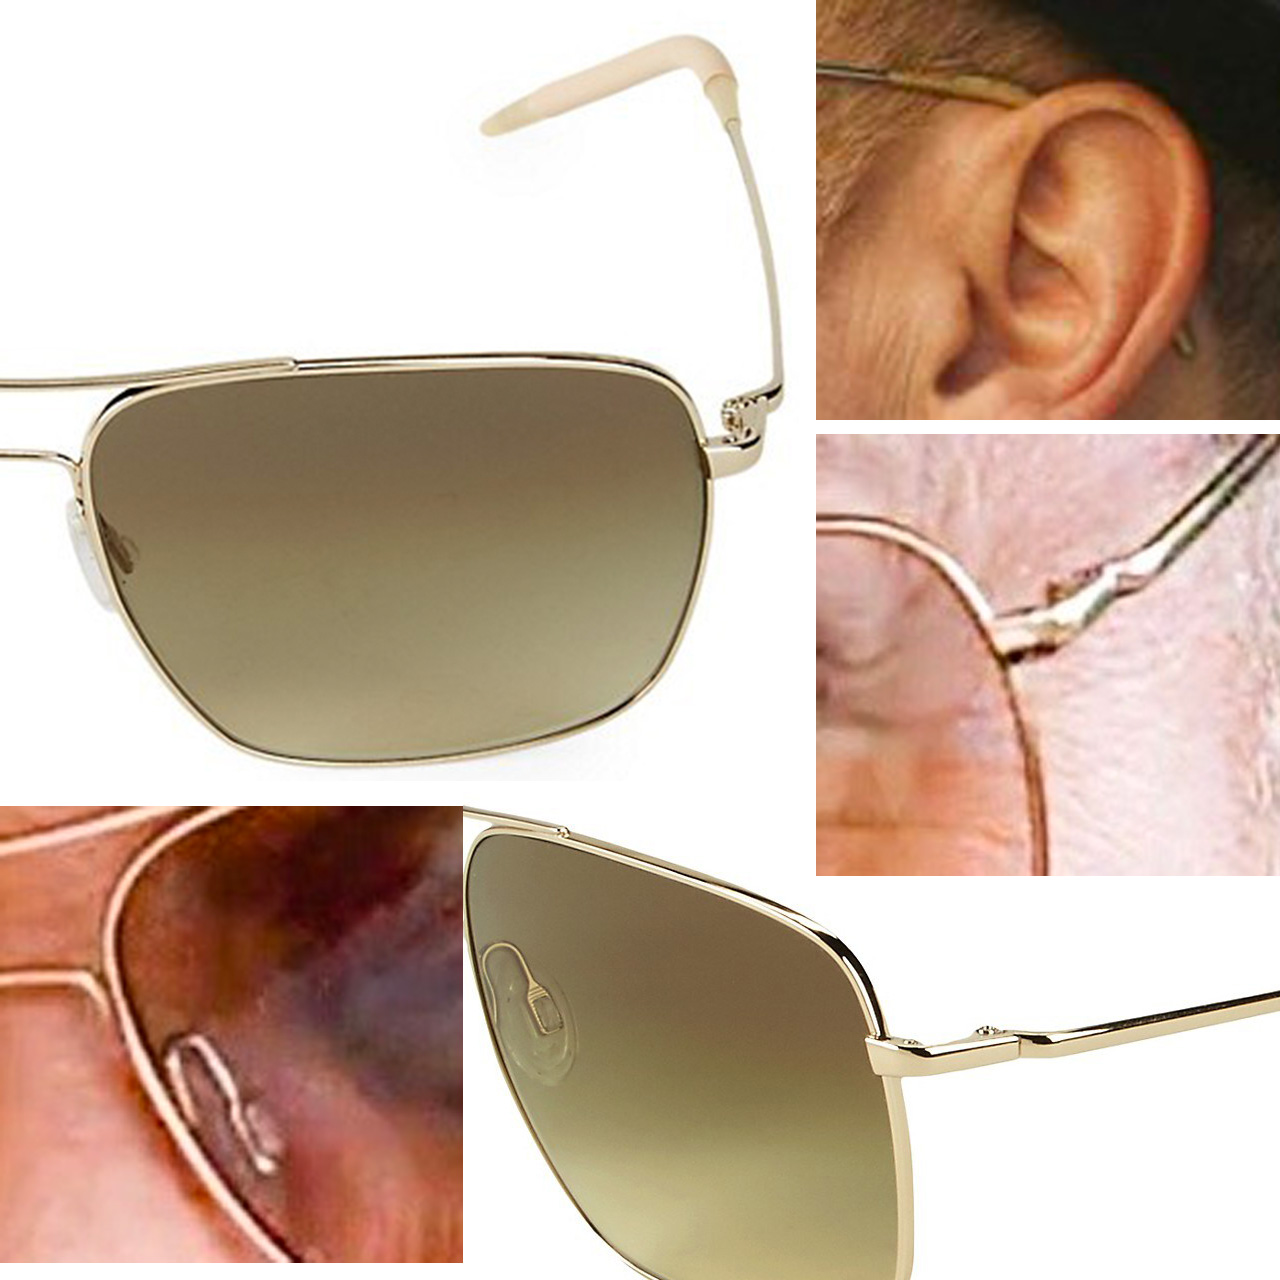 Oliver Peoples Clifton - James Spader - The Blacklist | Sunglasses ID -  celebrity sunglasses